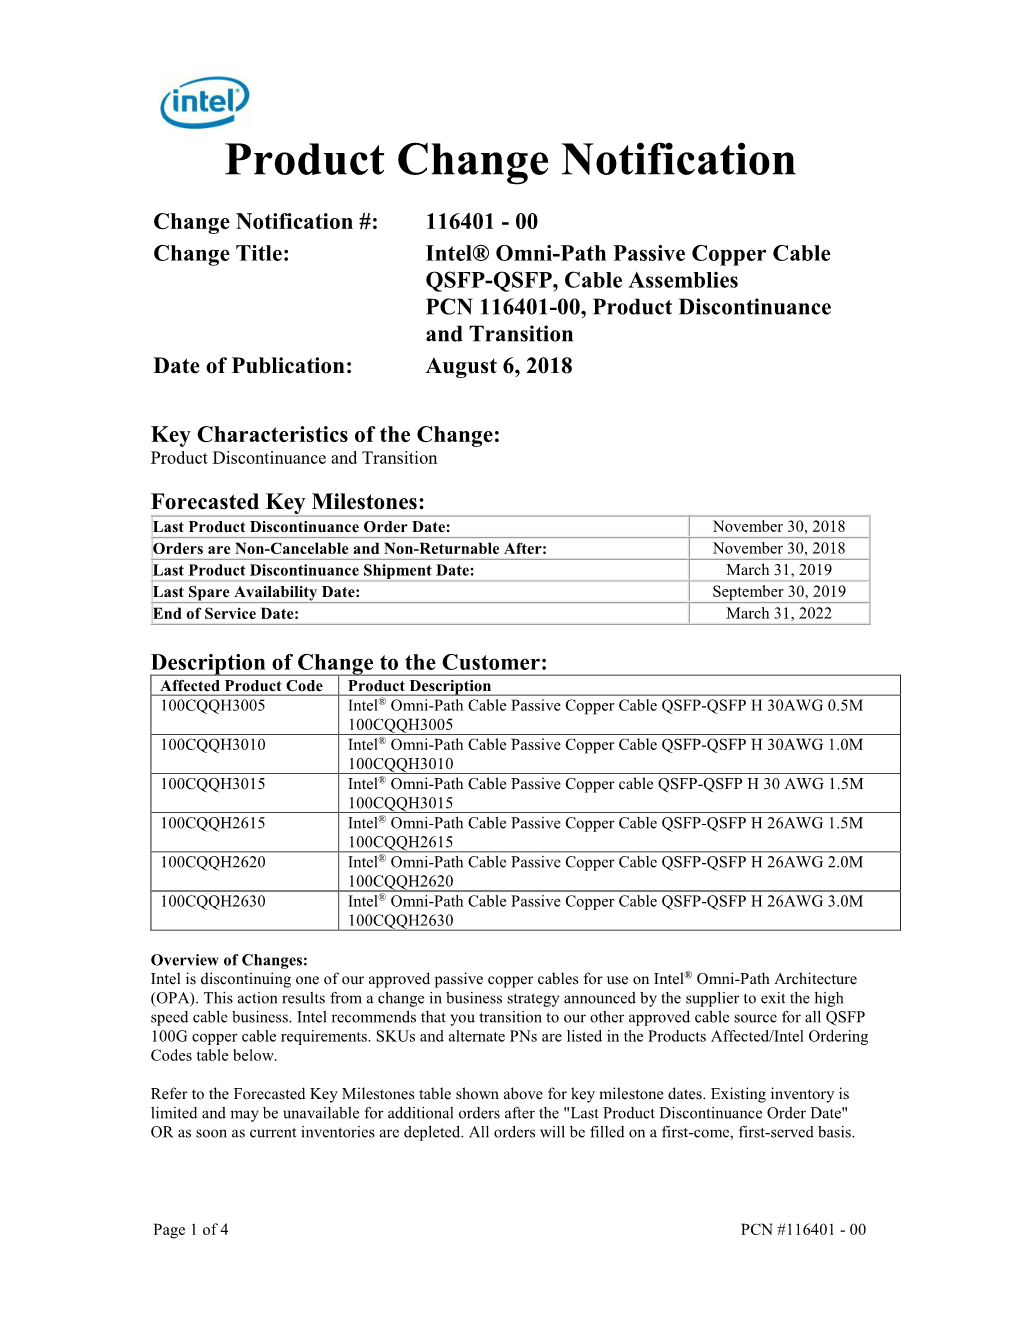 Product Change Notification 116401 - 00